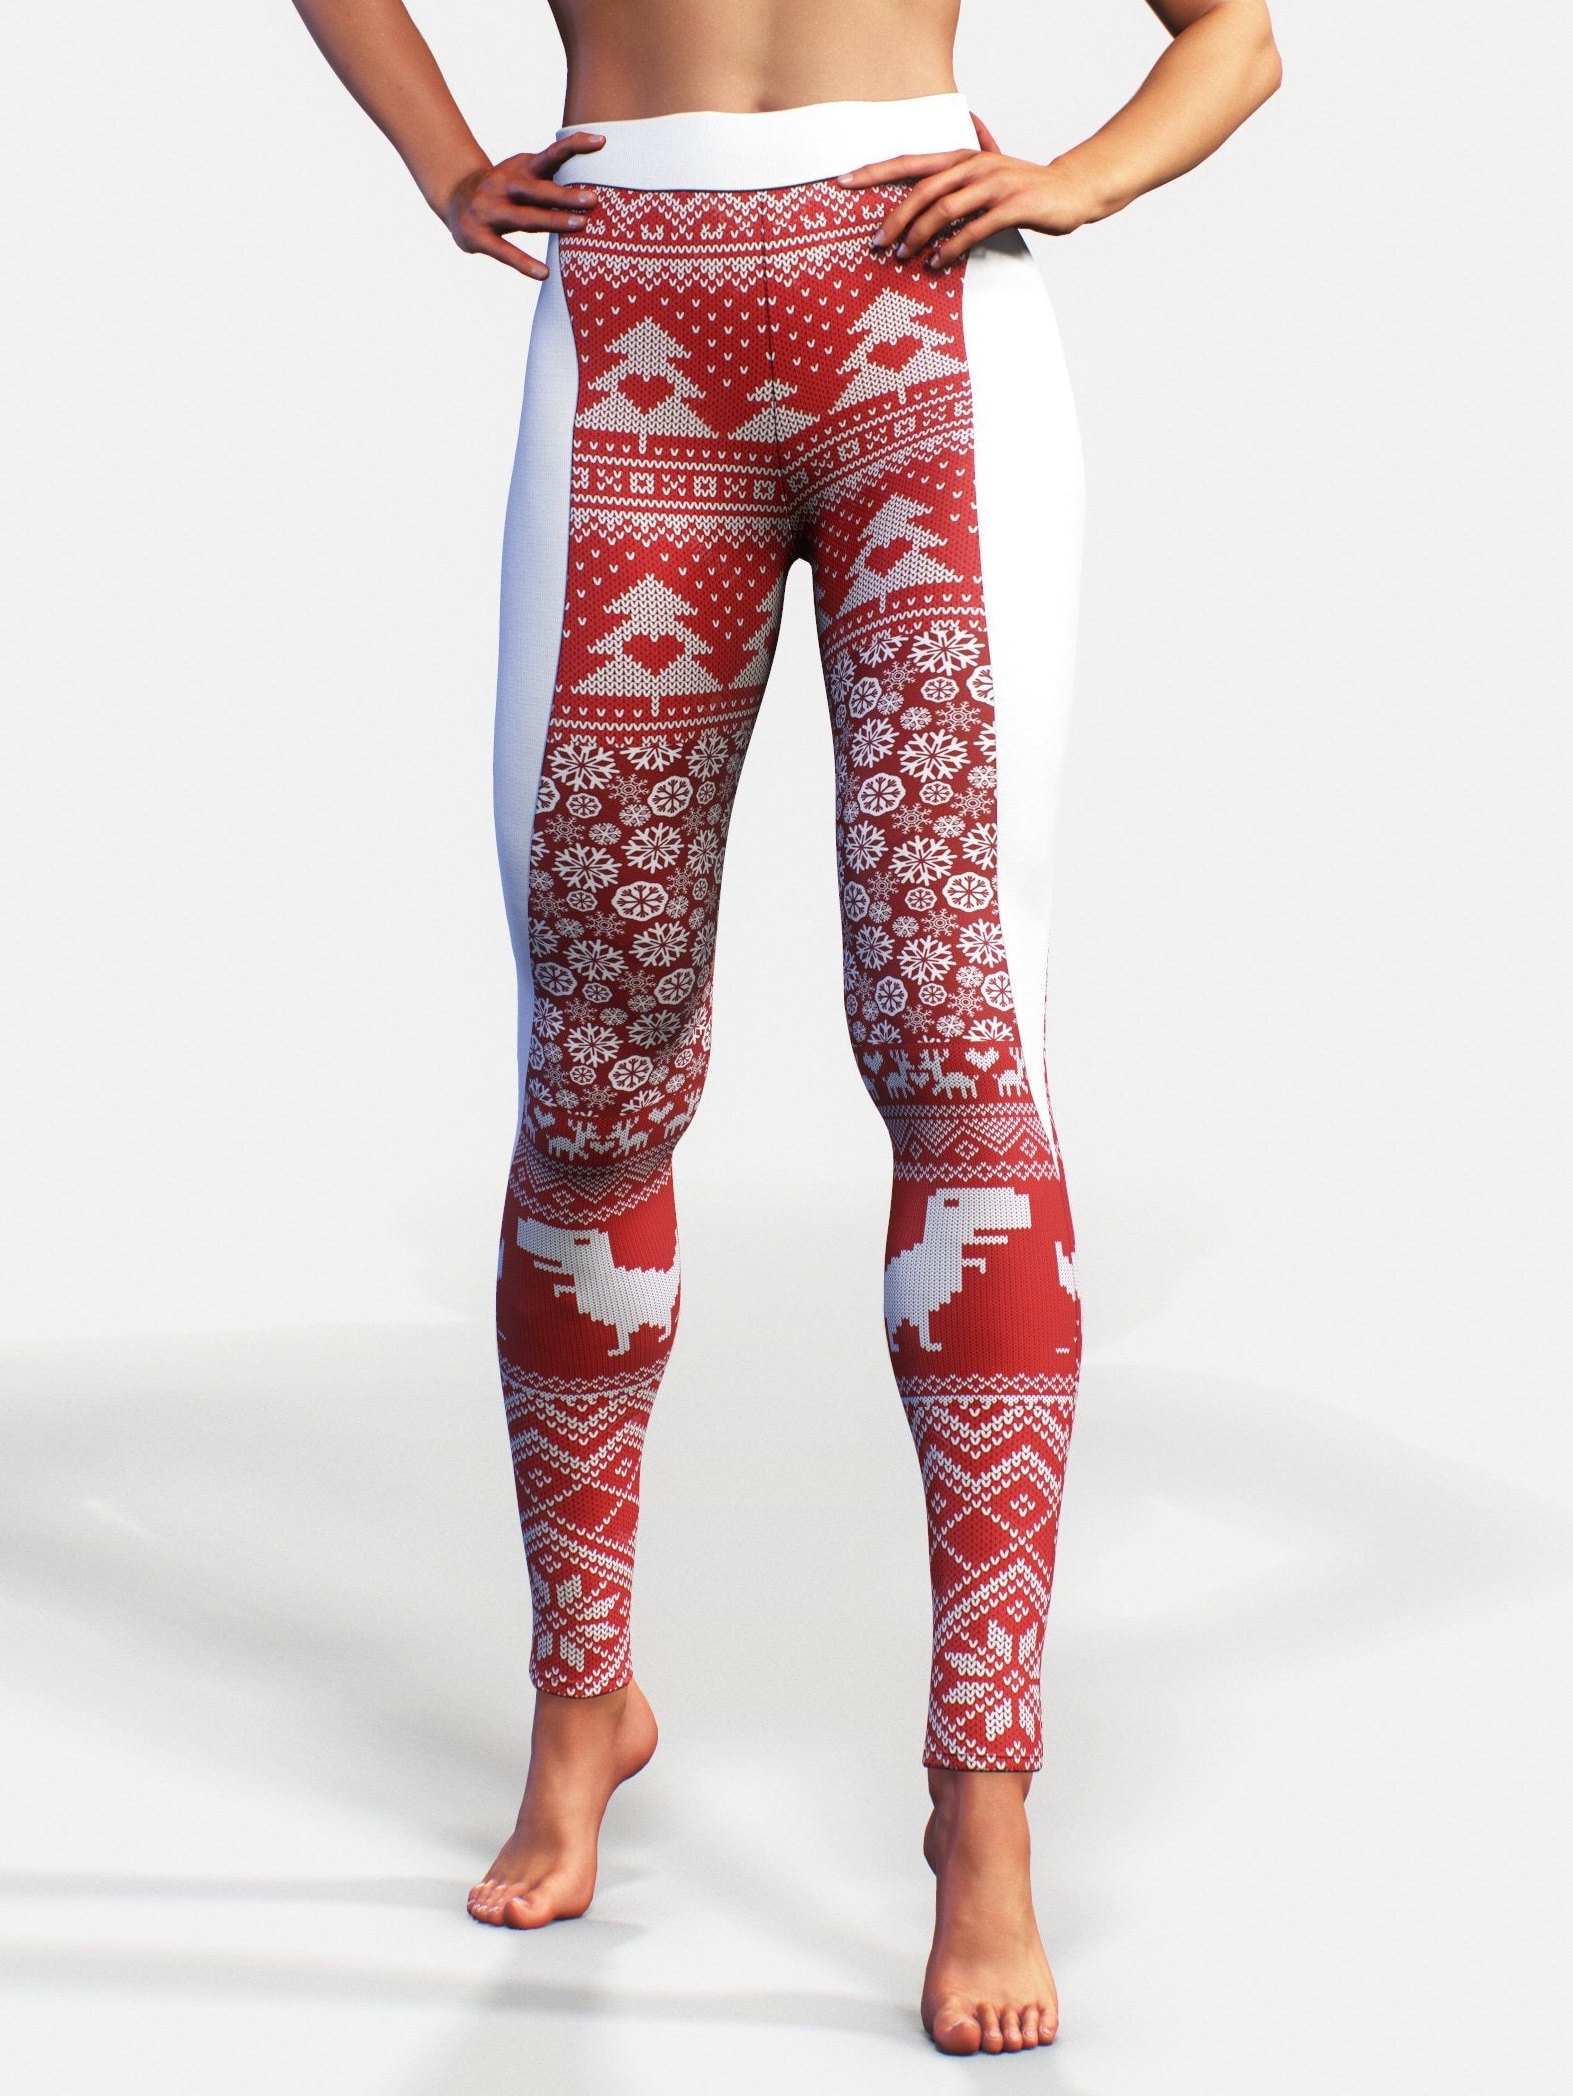 NEW SHAPING CUT Christmas Leggings Dinosaur Pattern Knitted | Etsy